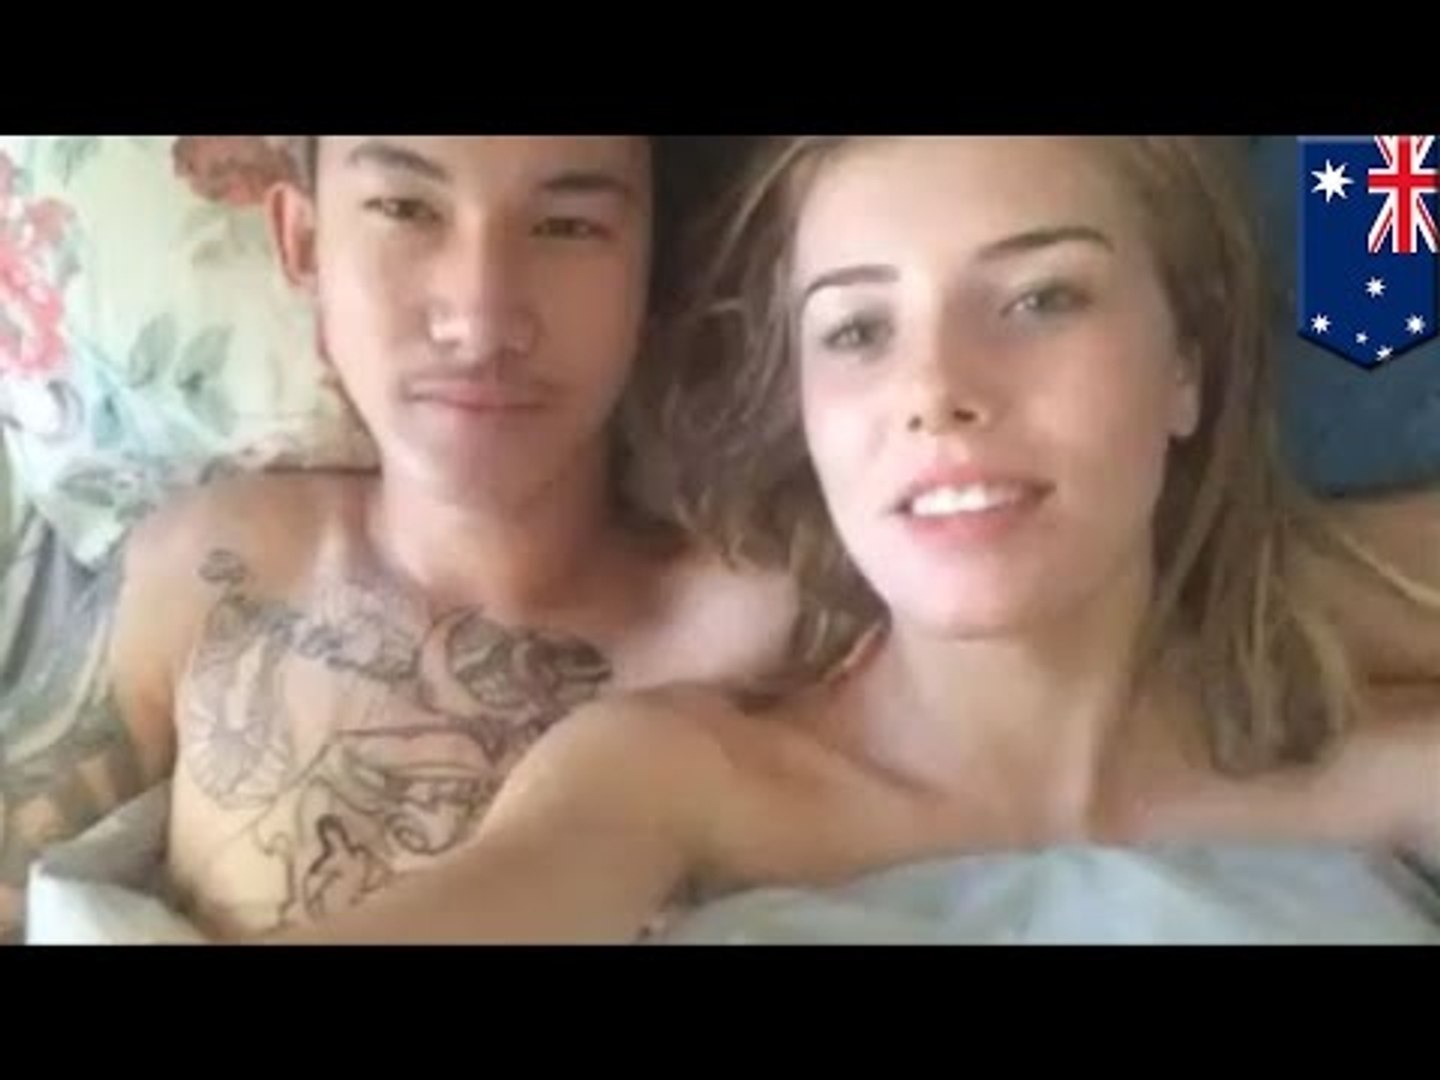 Post-sex selfie Aussie babe gets revenge on cheating ex after posting video online - TomoNews photo